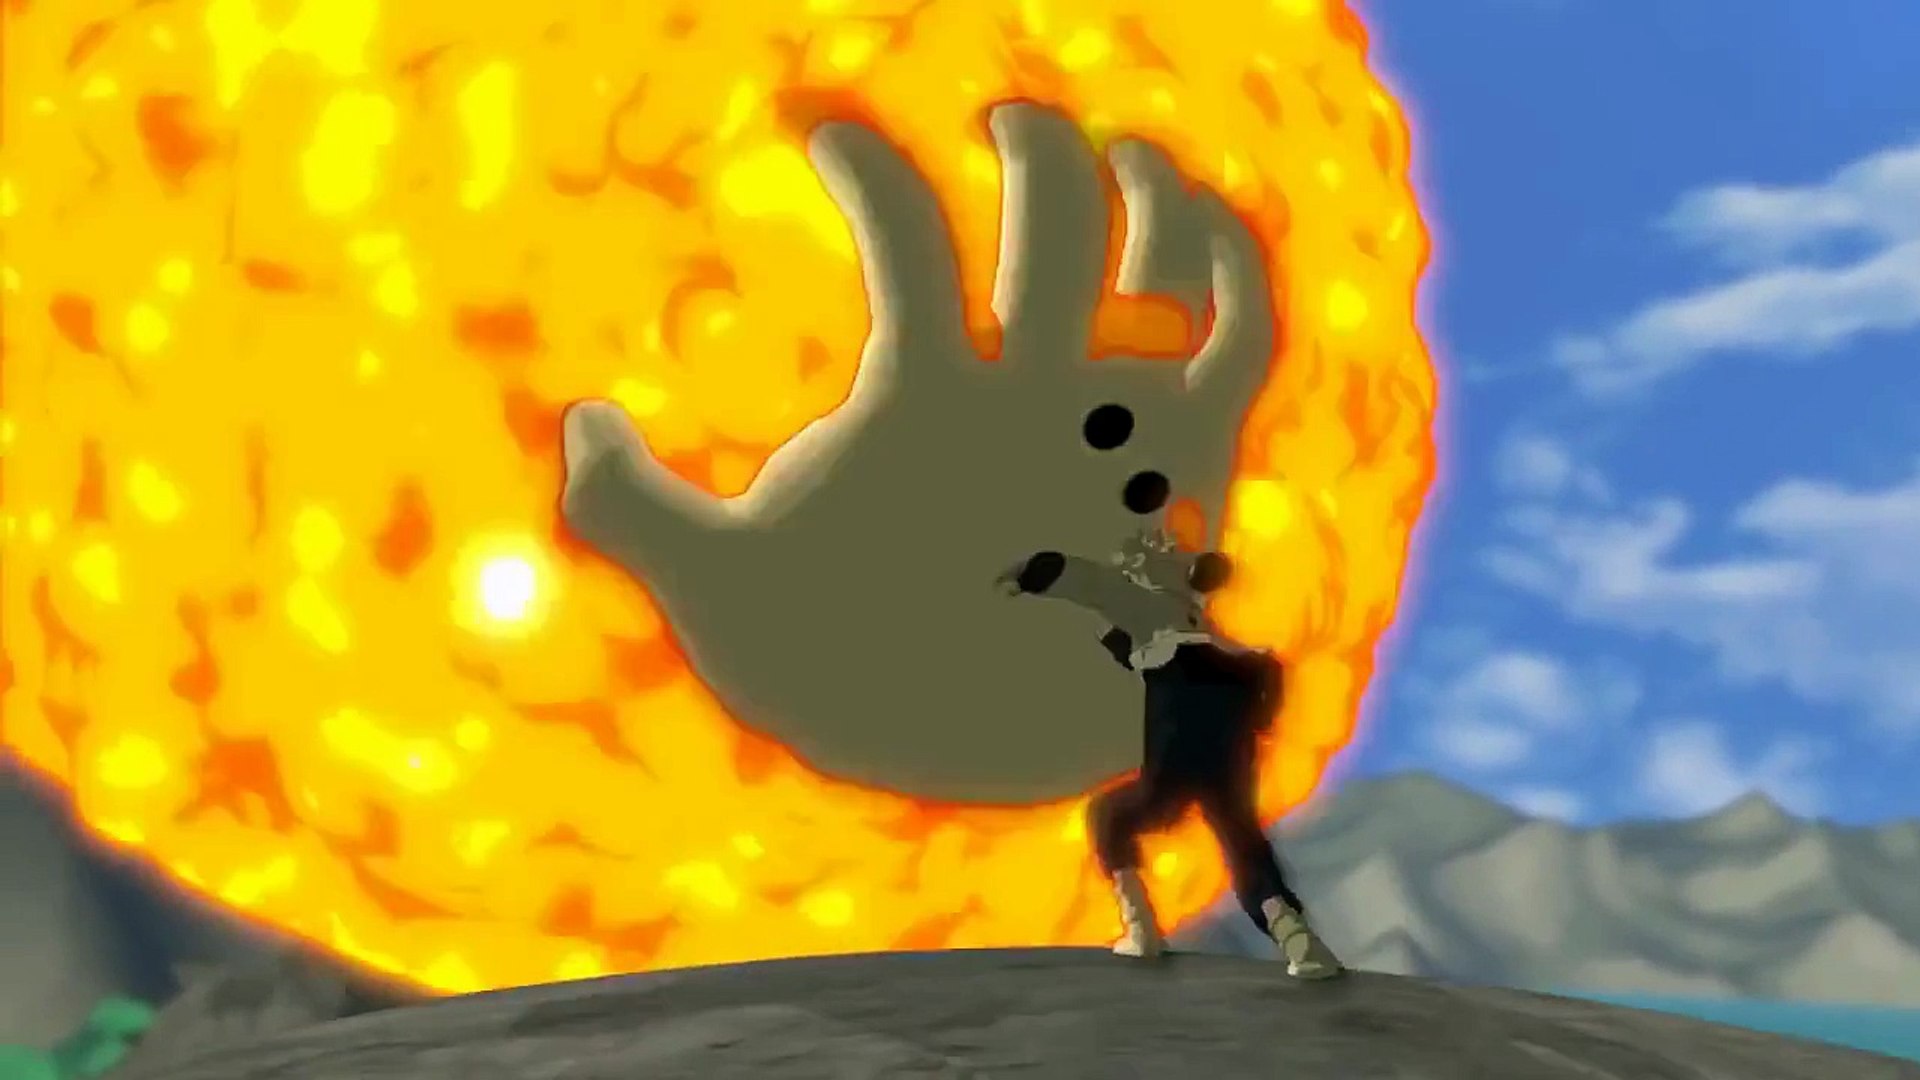 Naruto Vs Sasuke Final battle! [Fan Animation] - Dailymotion Video